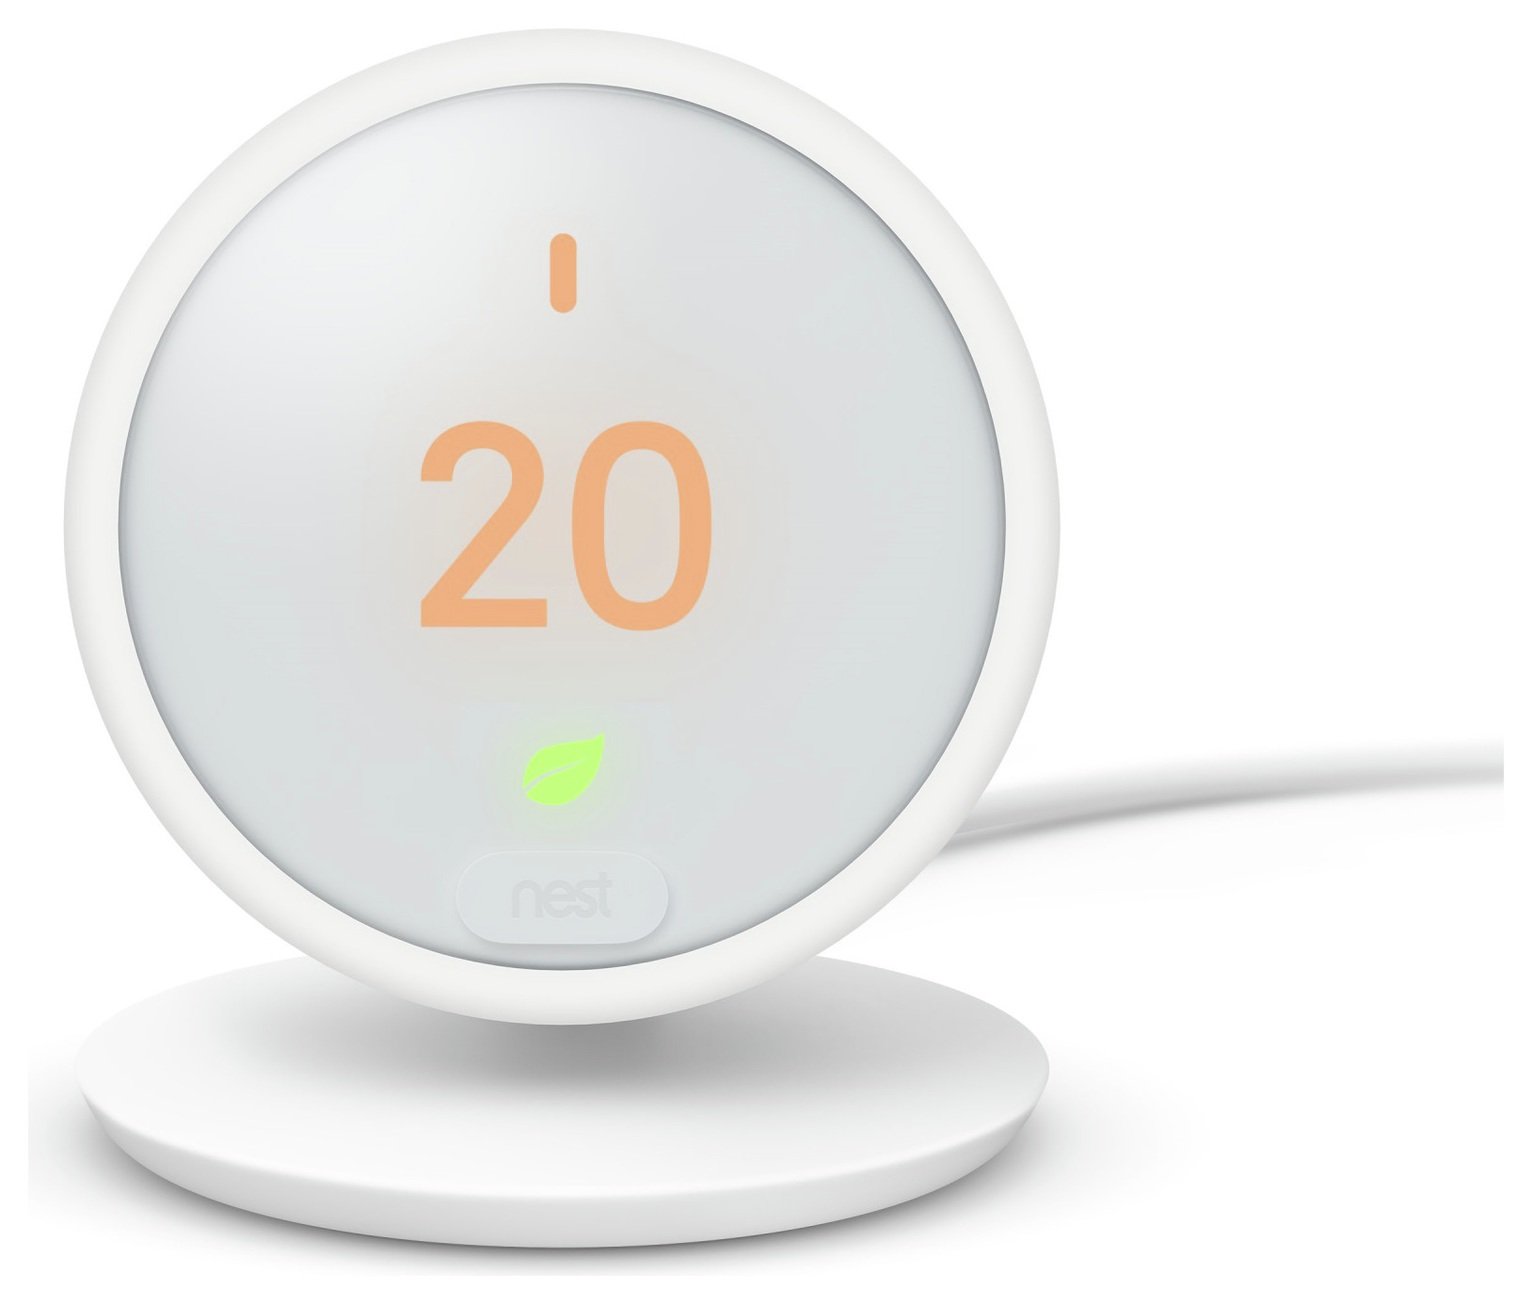 Google Nest Thermostat E Review